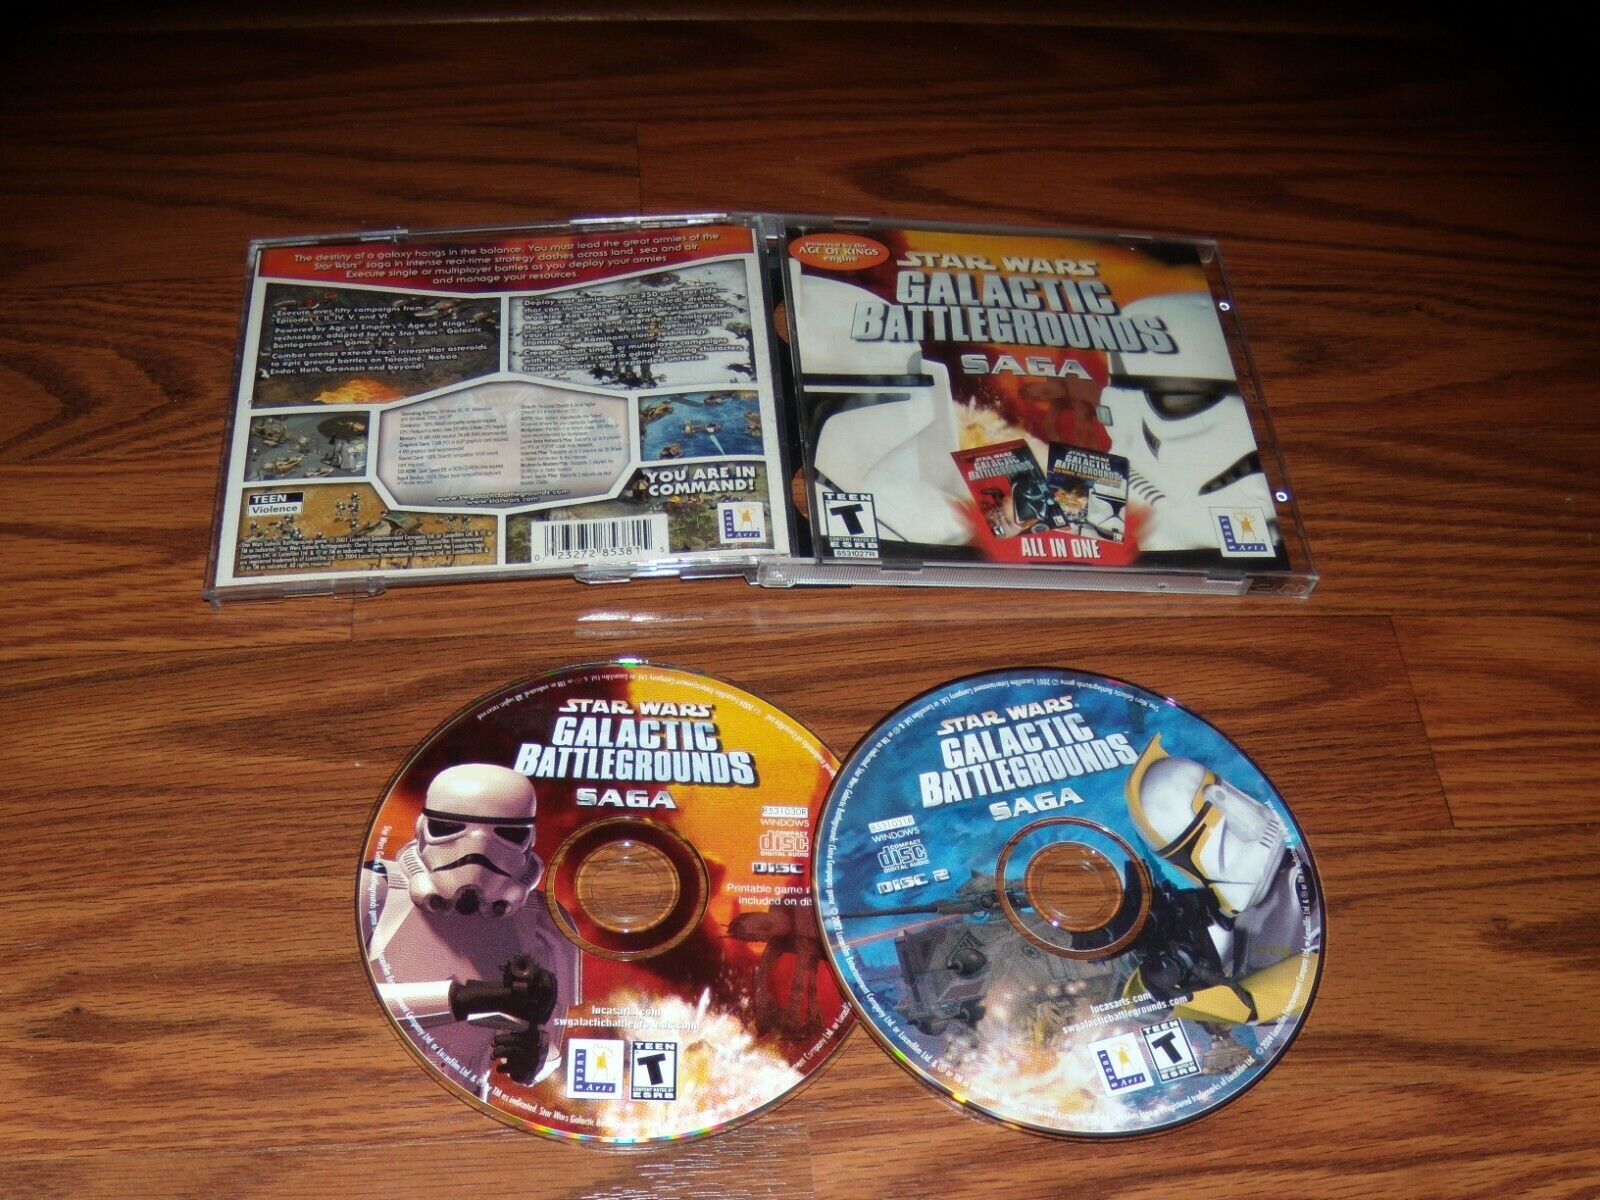 Star Wars Galactic Battlegrounds Saga (PC, 2001) Mint Game CD-ROM